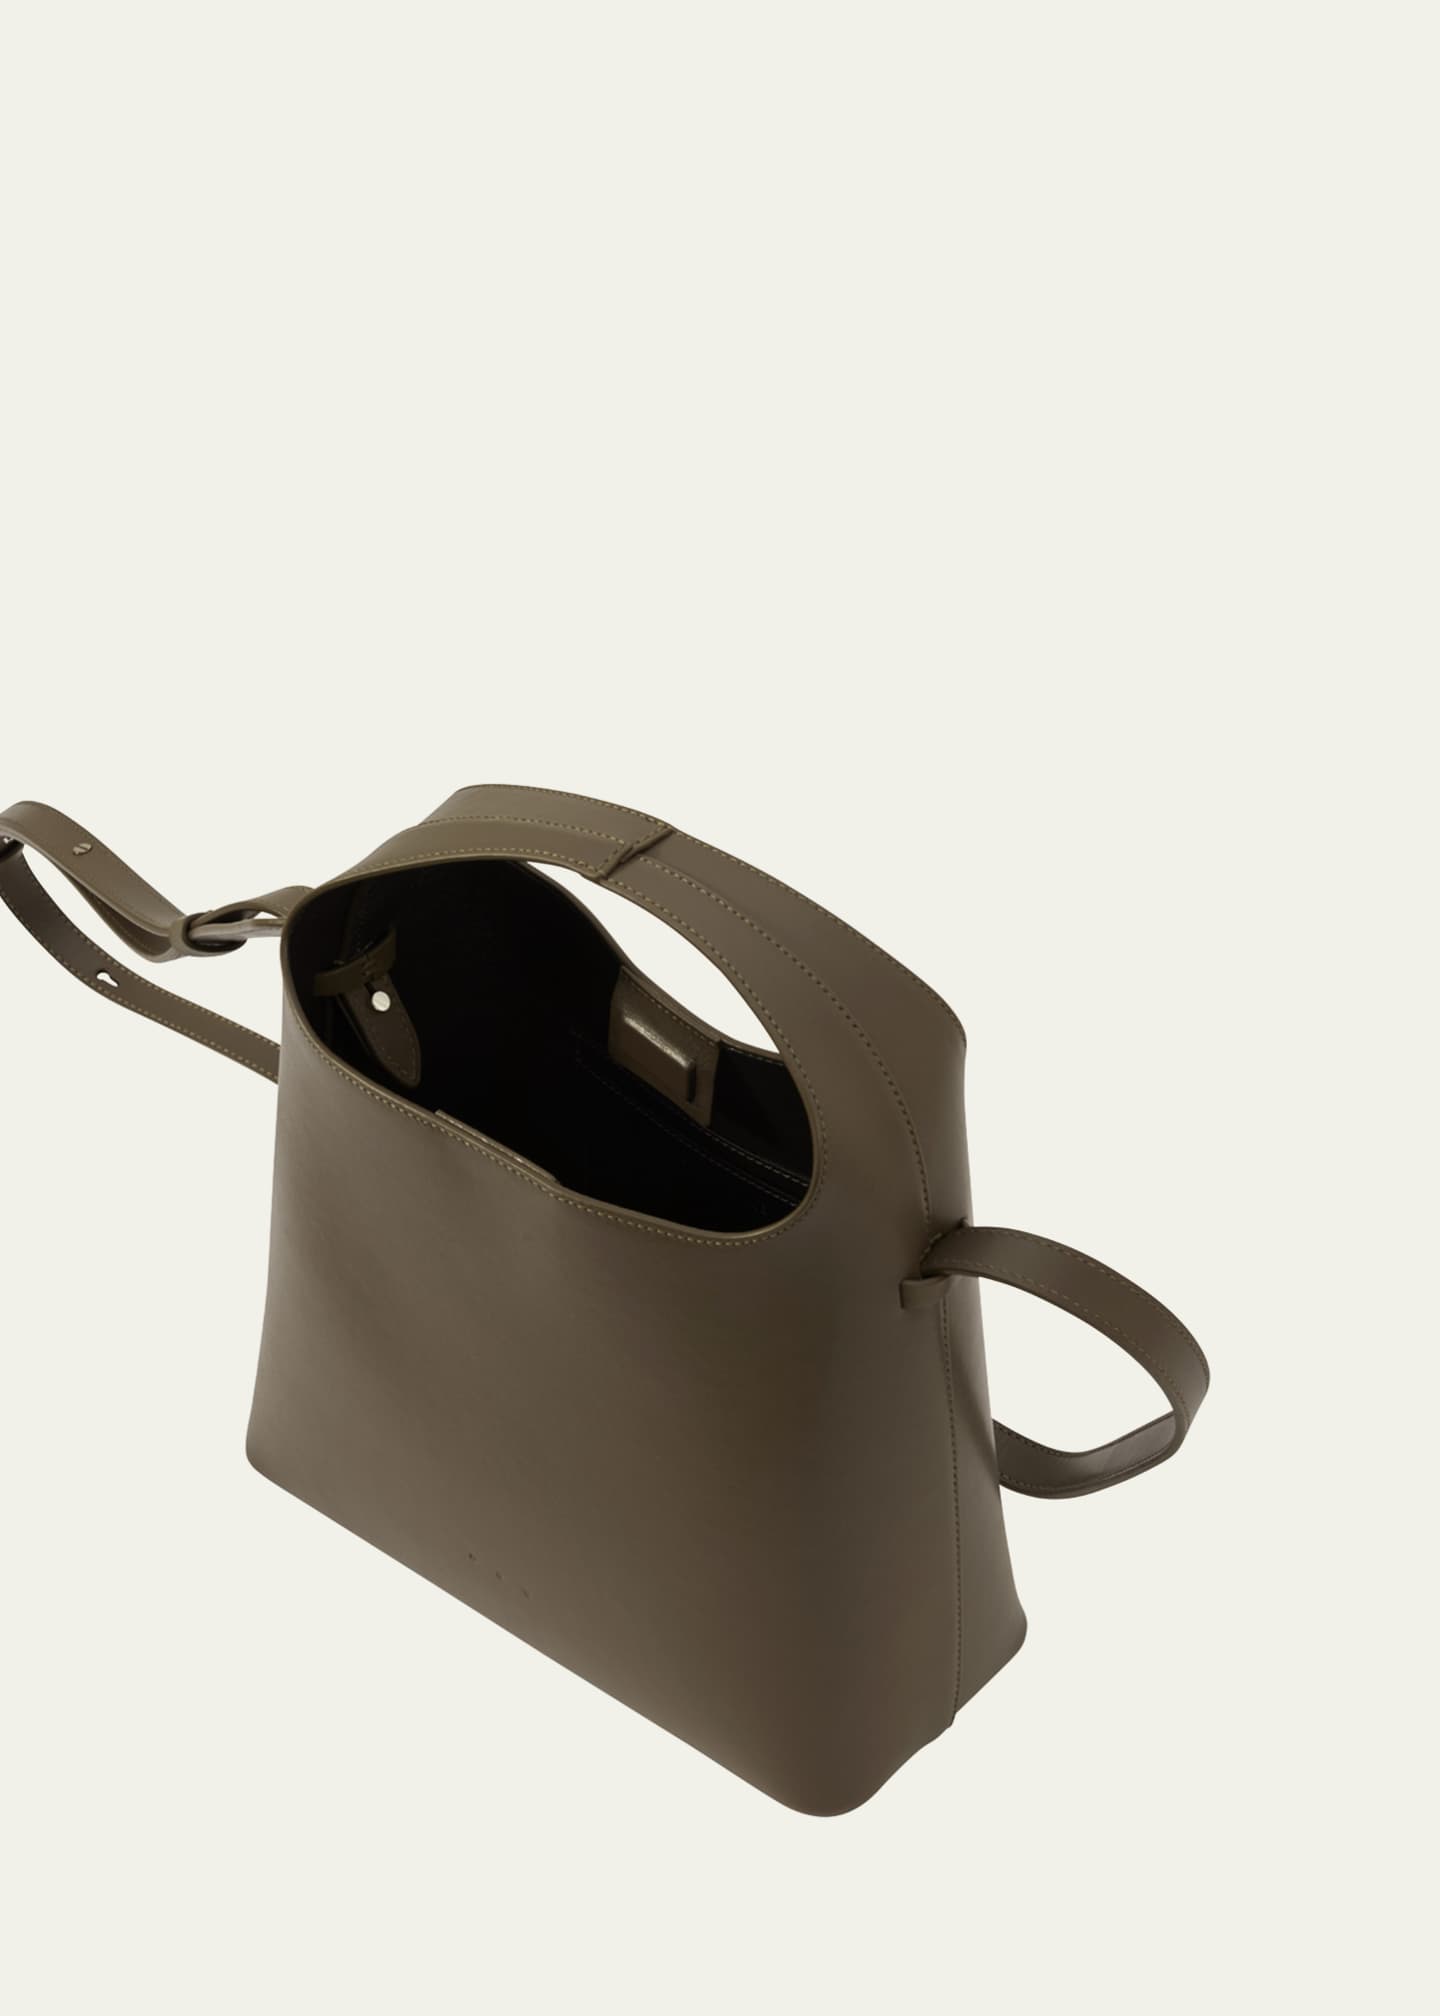 Aesther Ekme + Aesther Ekme Flat shoulder bag